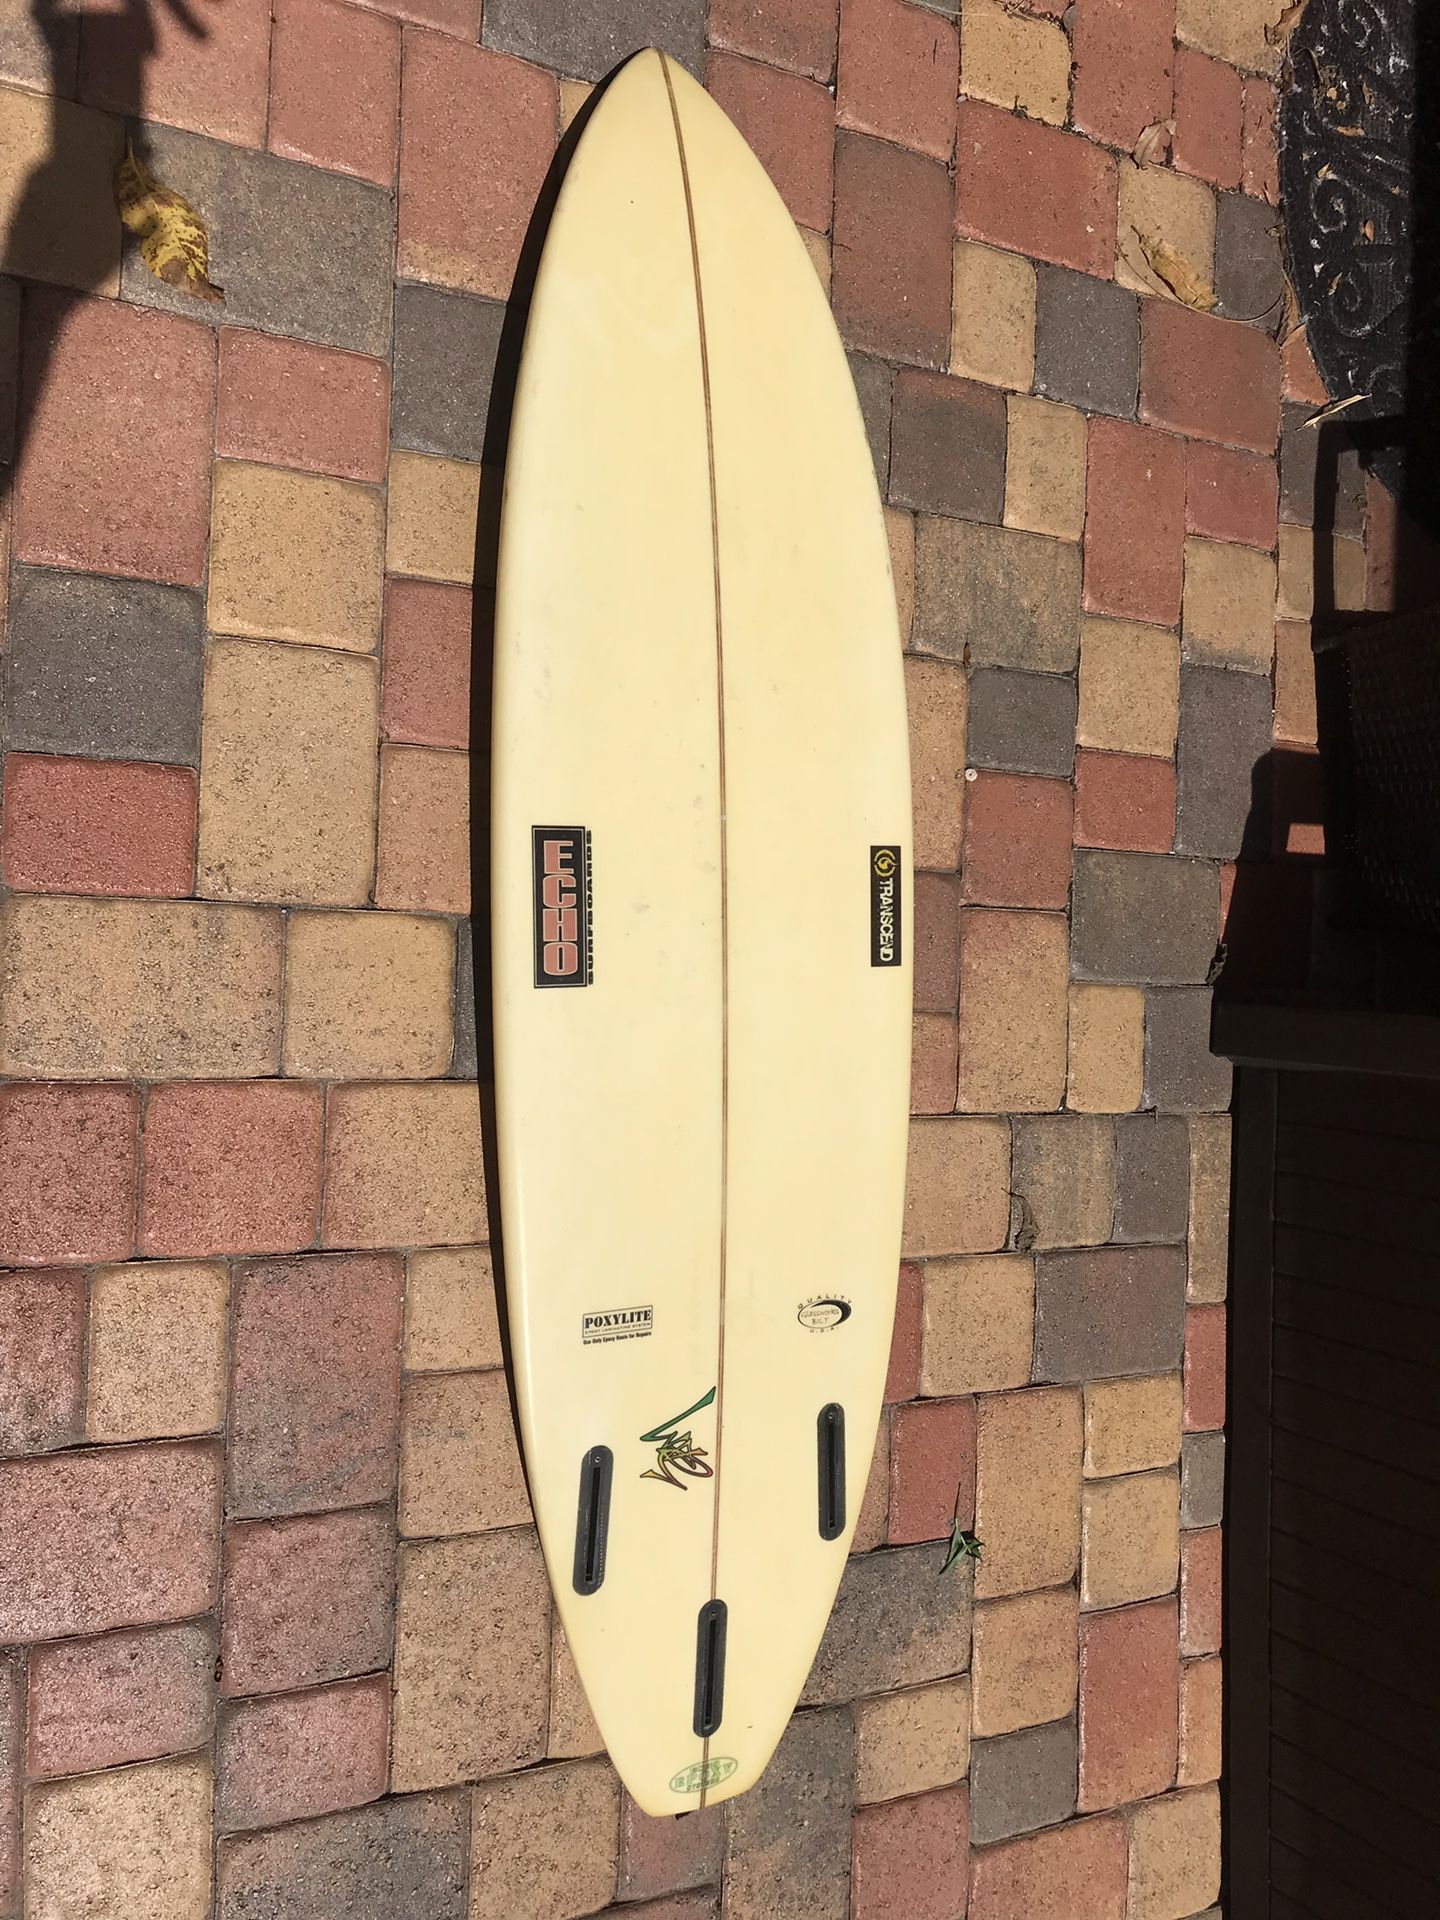 5’10” surfboard